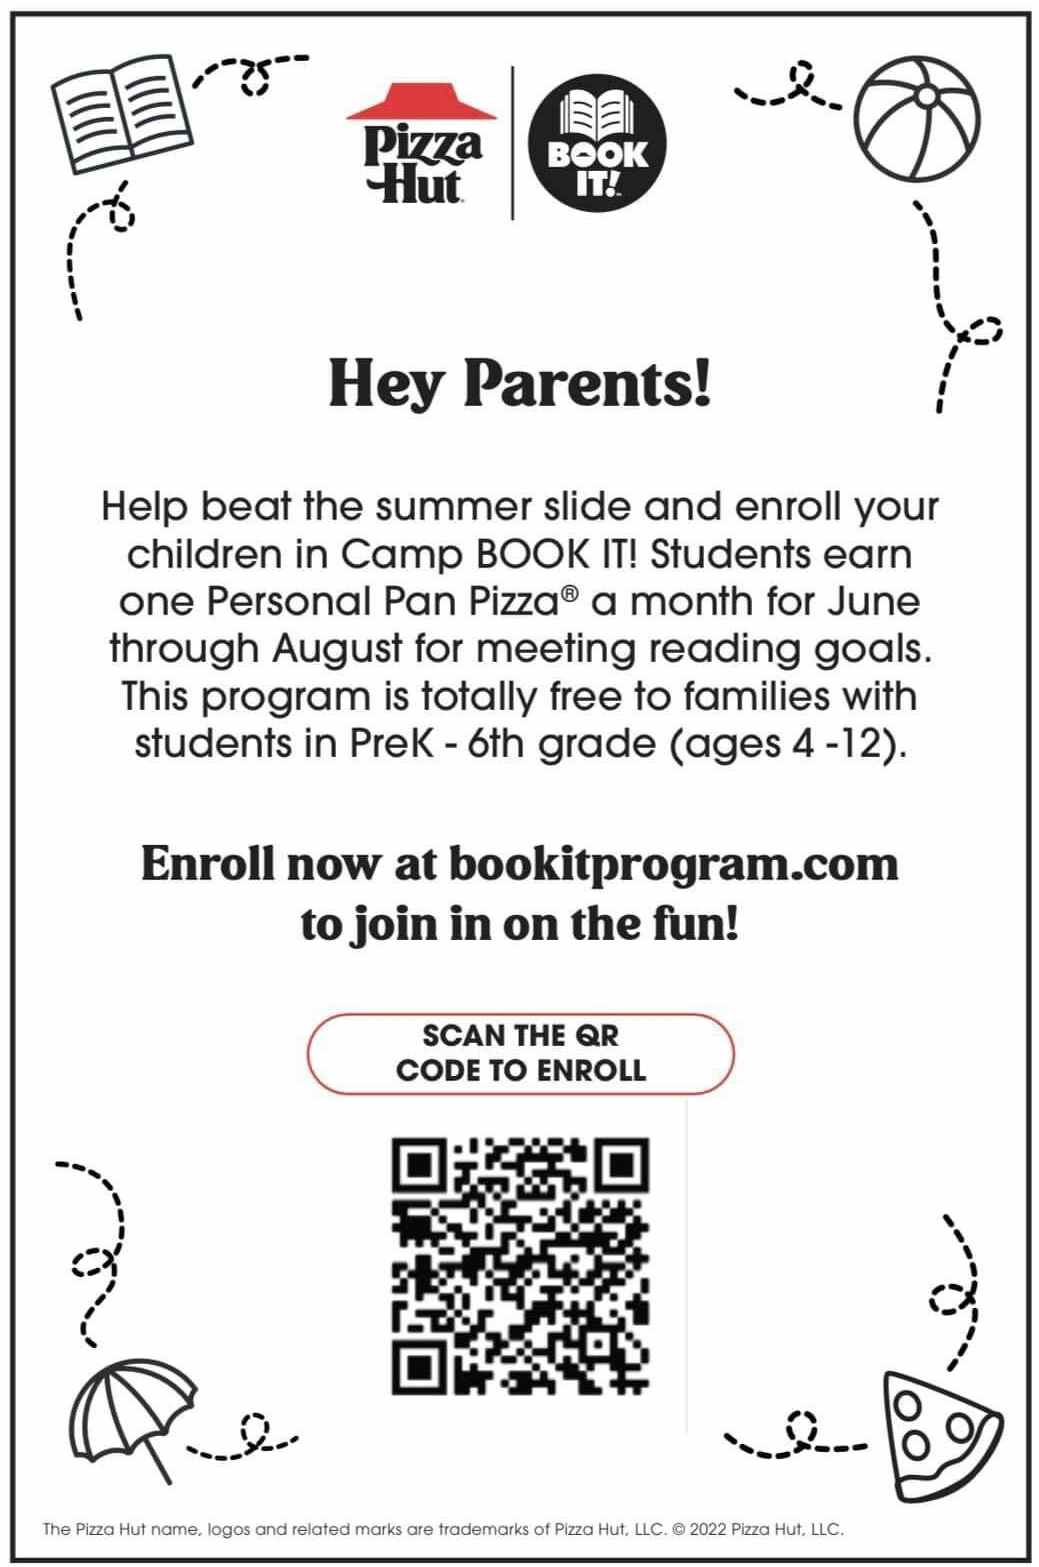 A graphic of the Pizza Hut Book-it enrollment QR code